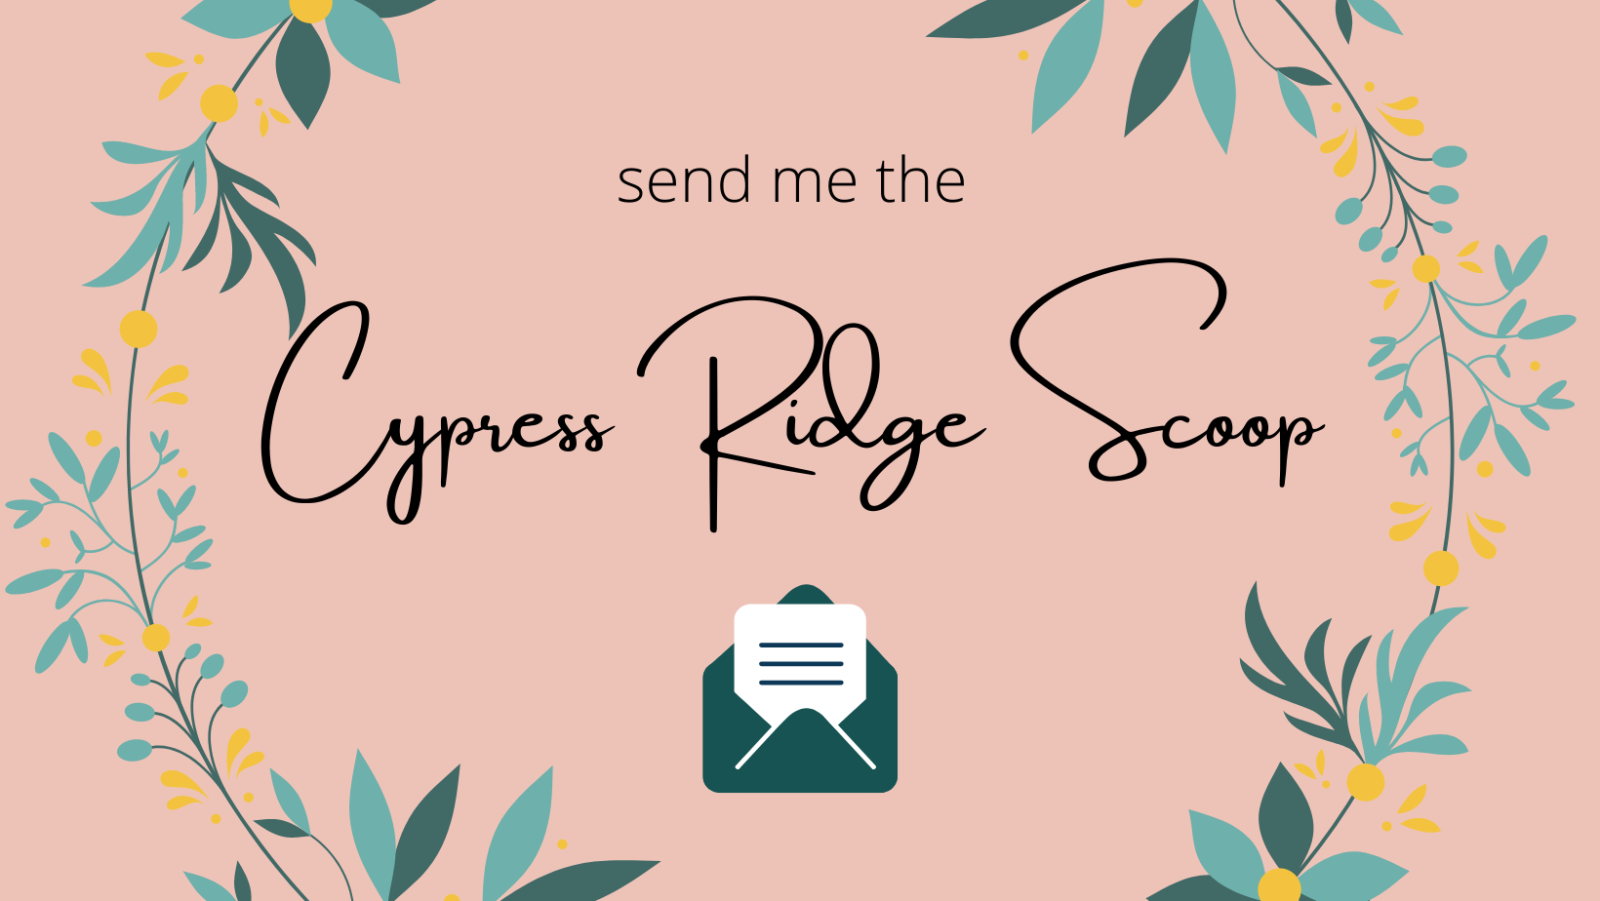 Cypress Ridge Scoop (1)